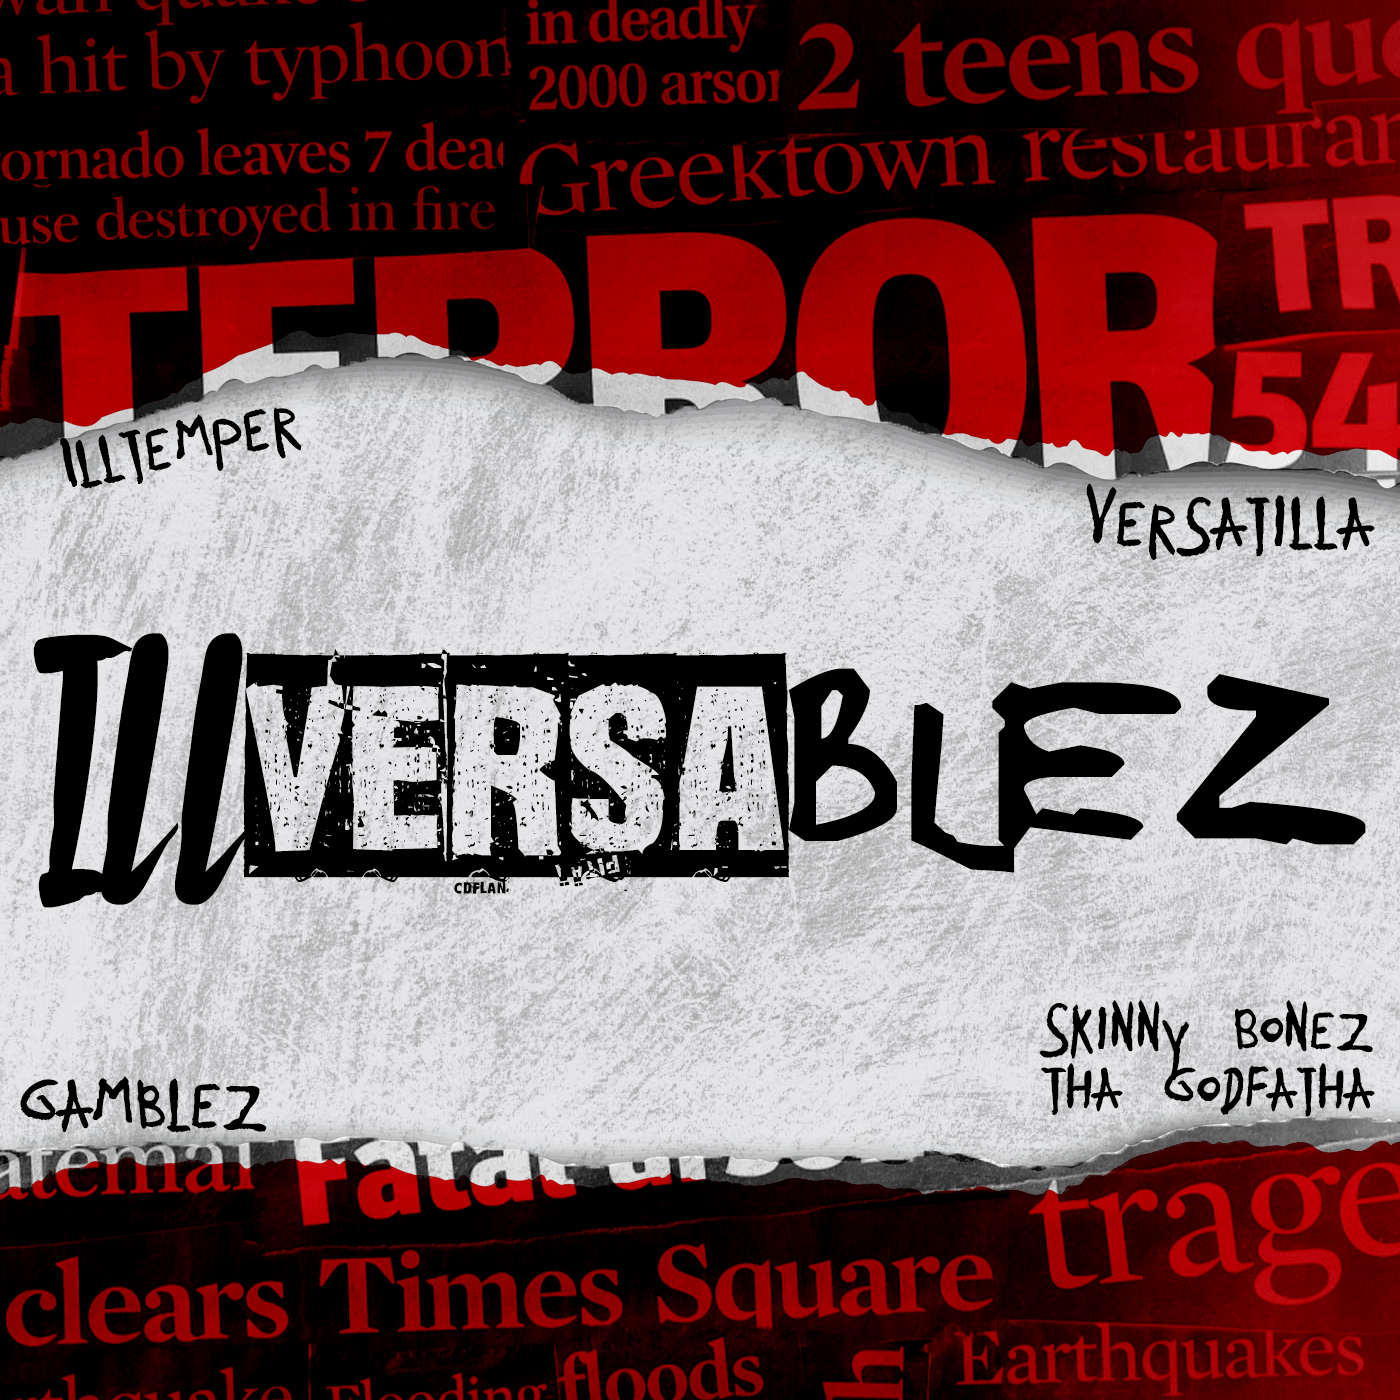 ILLtemper, VersaTilla, Gamblez, & Skinny Bonez Tha Godfatha Drop ‘Illversablez’ EP